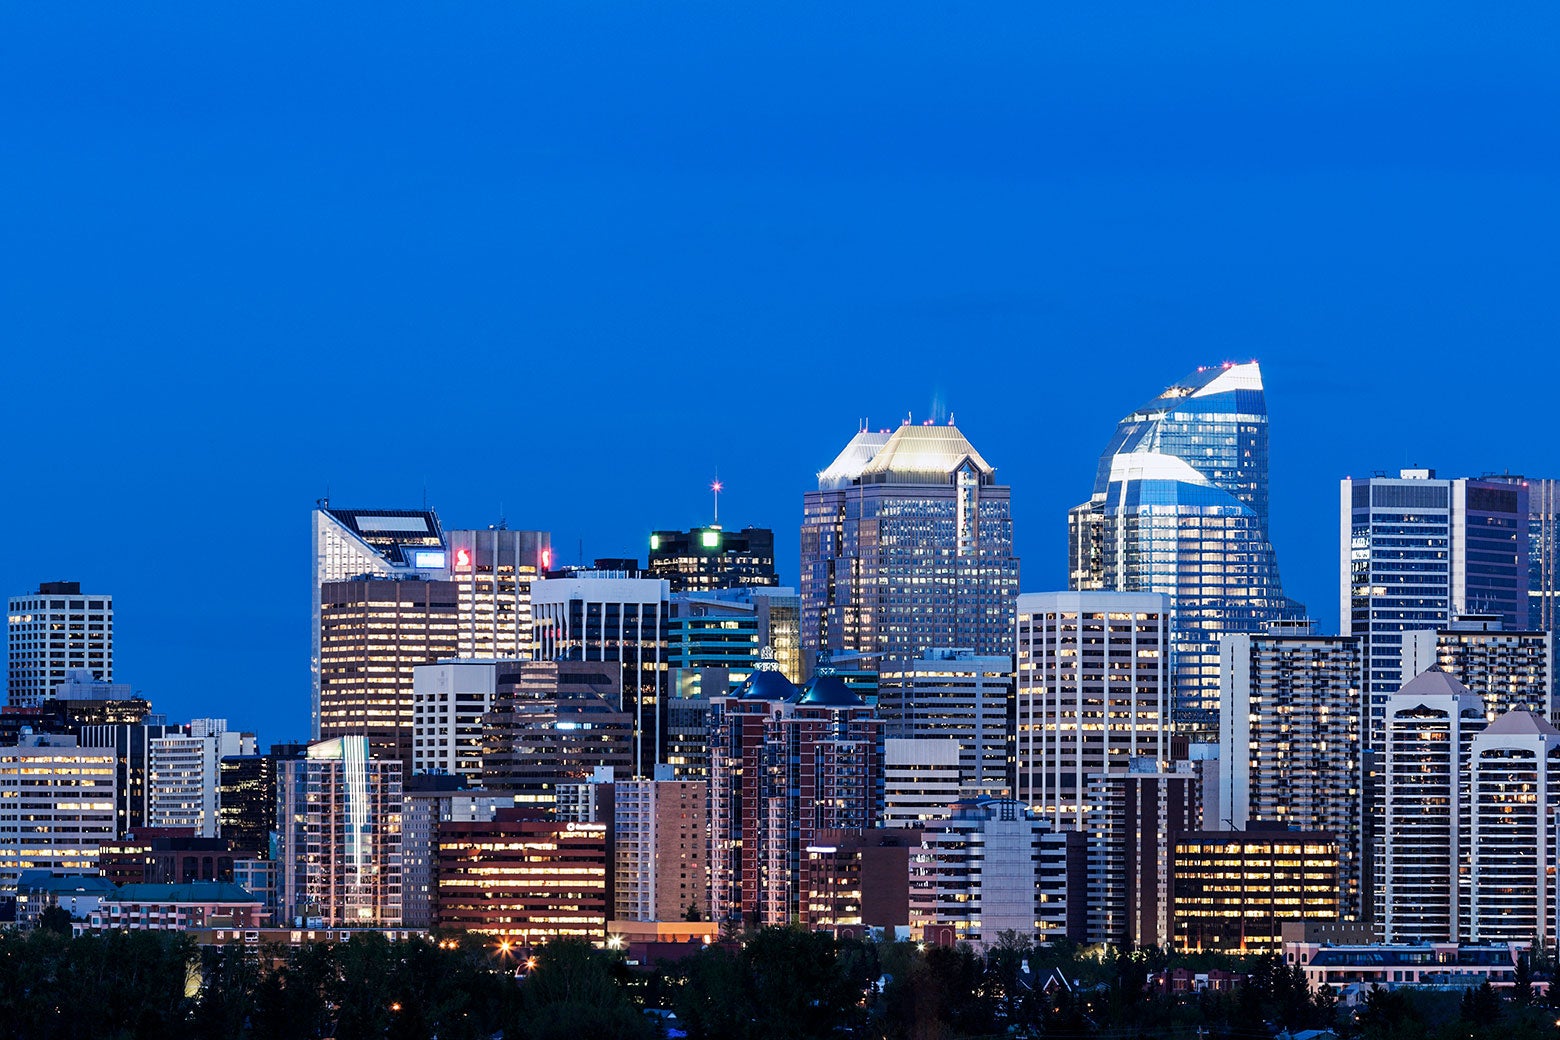 The Calgary skyline lit up at twilight